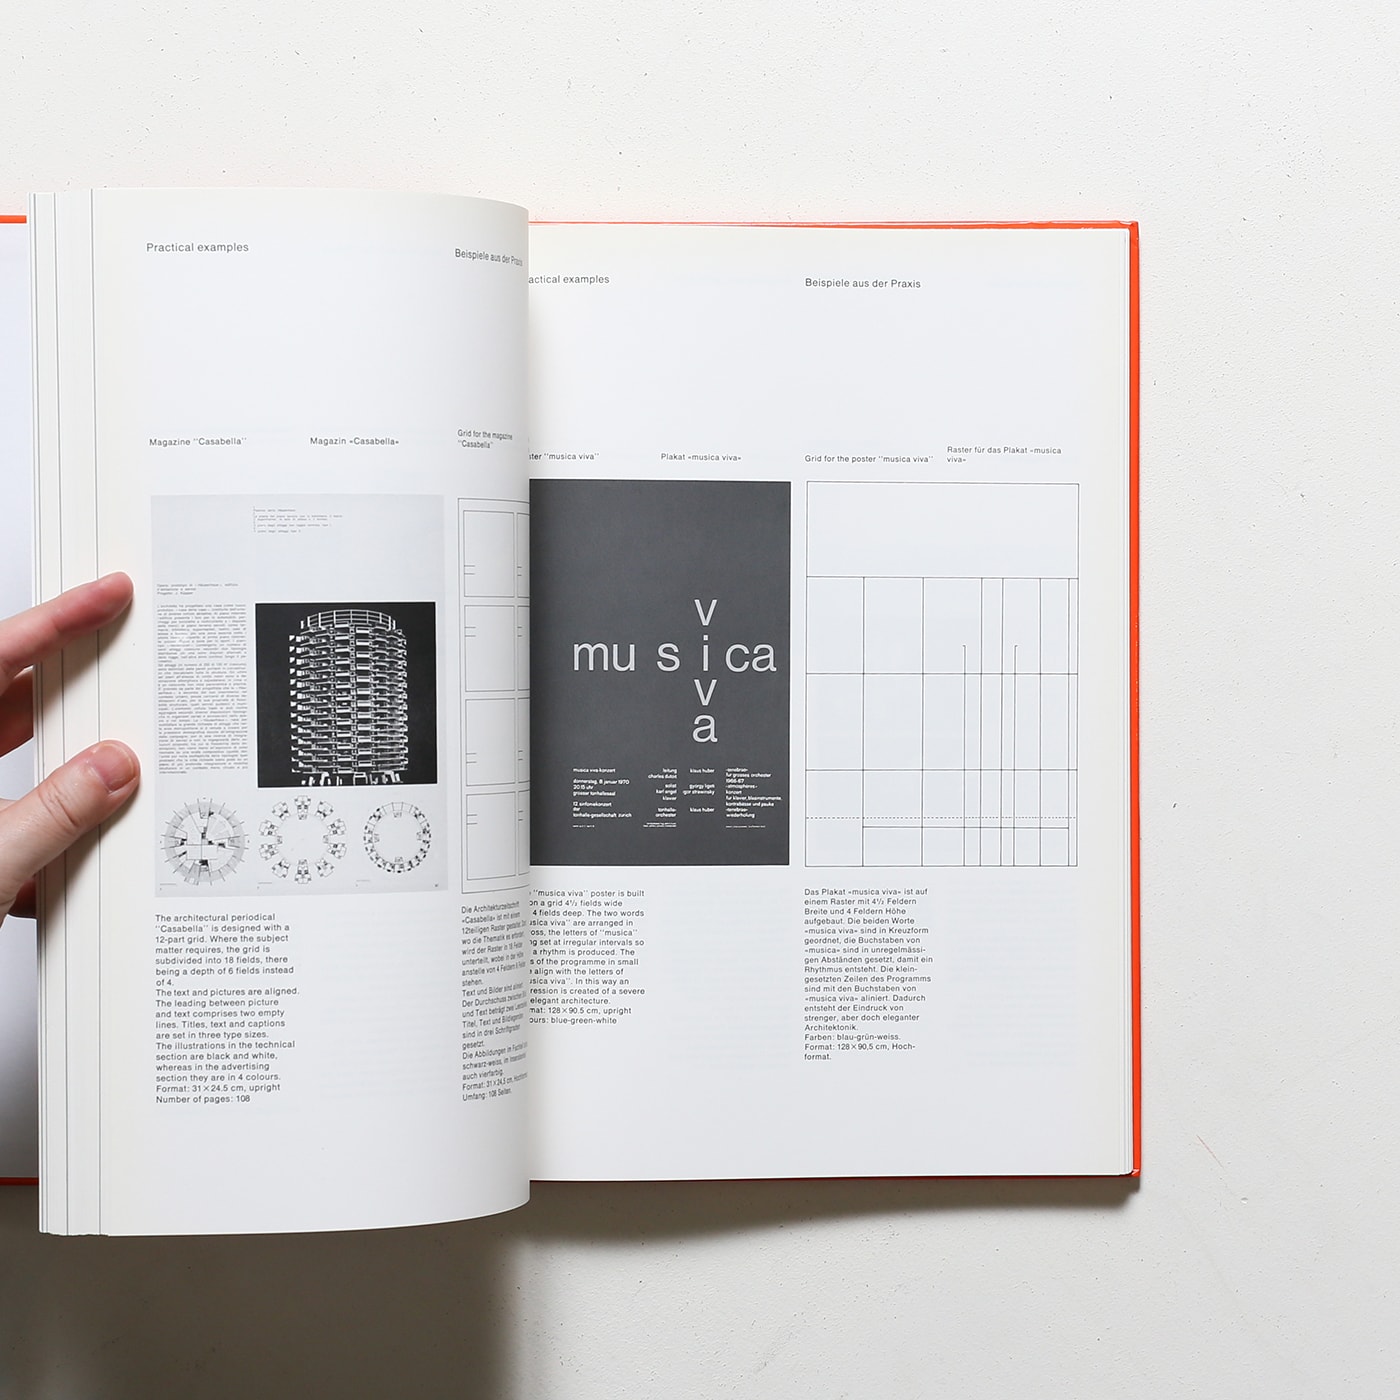 Grid Systems in Graphic Design | Josef Muller-Brockmann ヨゼフ